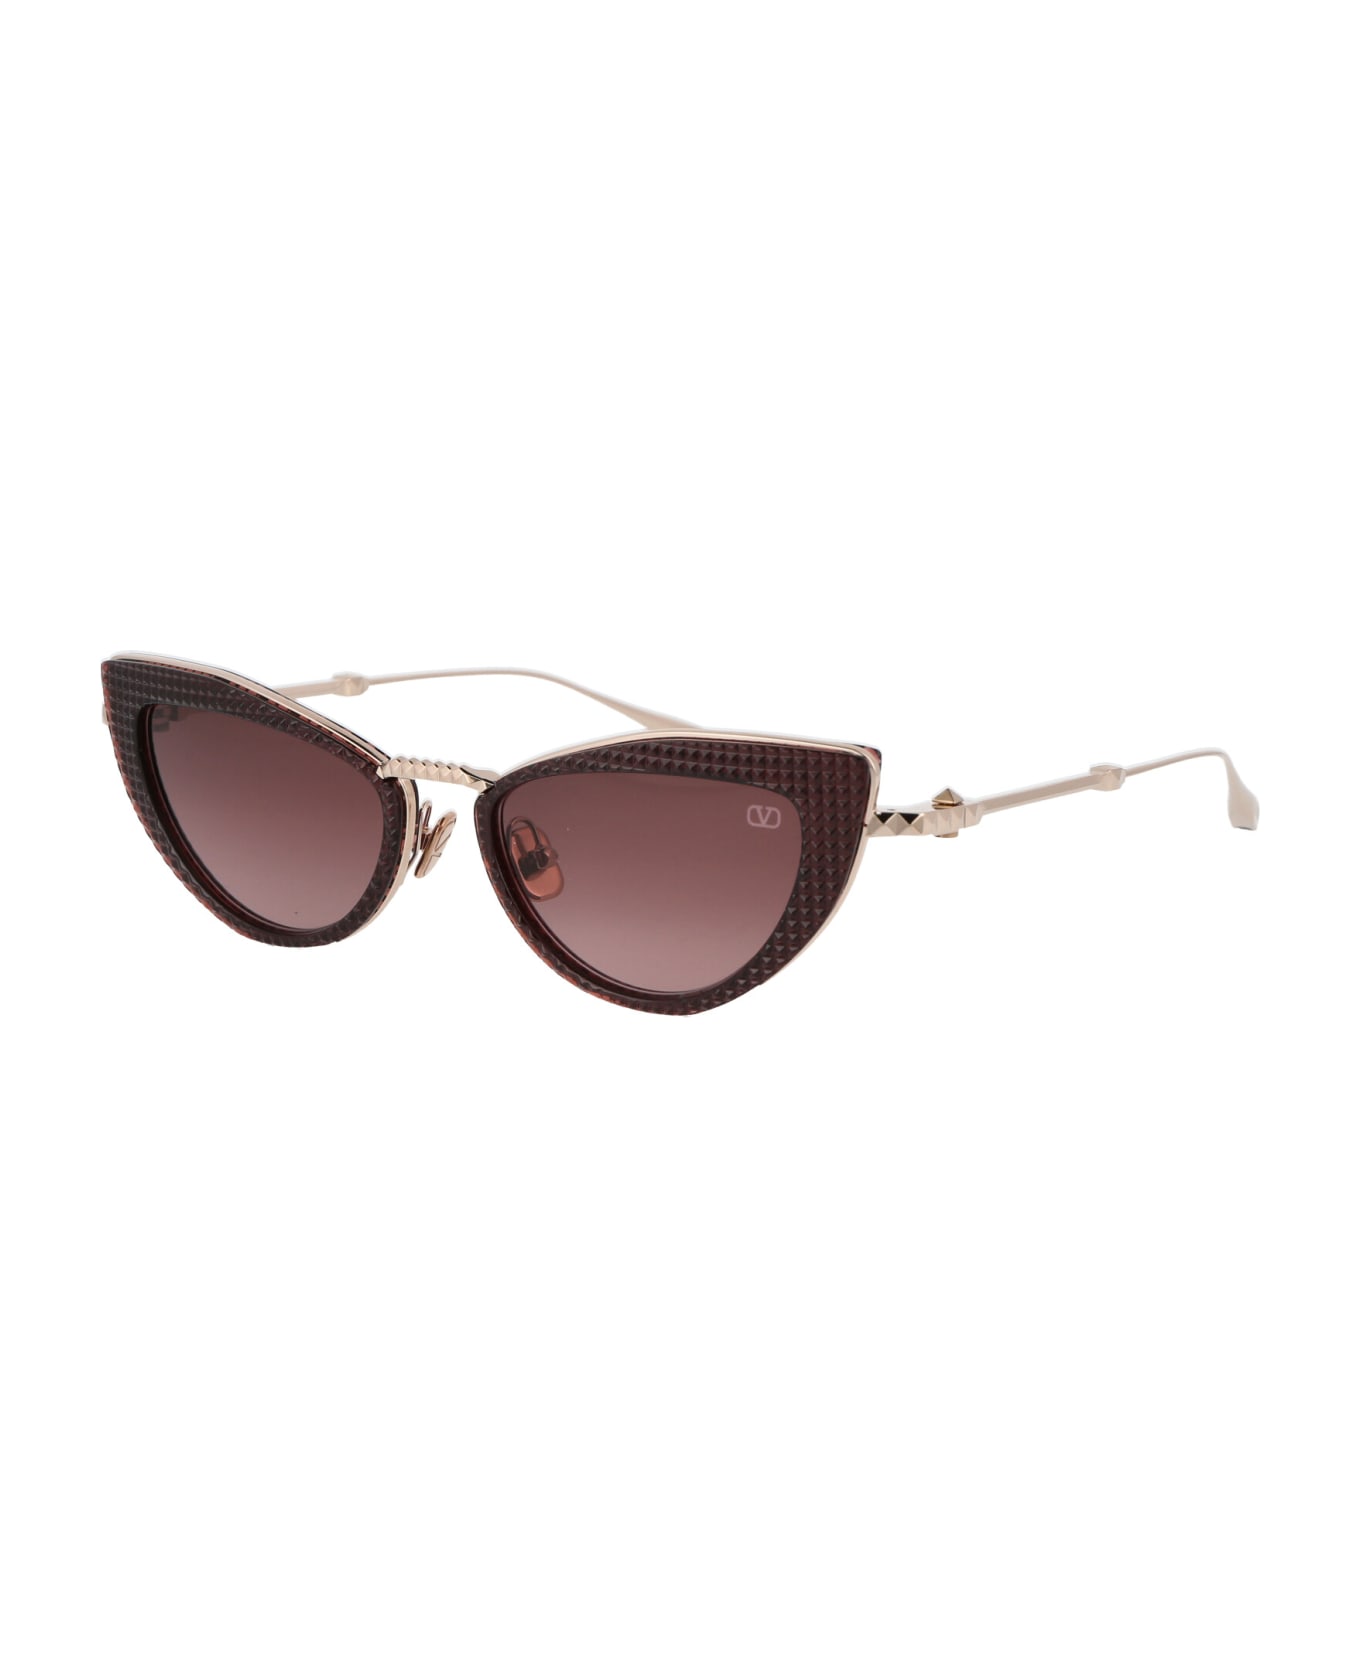 Valentino Eyewear Viii Sunglasses - WHITE GOLD CRYSTAL BORDEAUX W/ DARK ROSE TO LIGHT ROSE GRADIENT サングラス